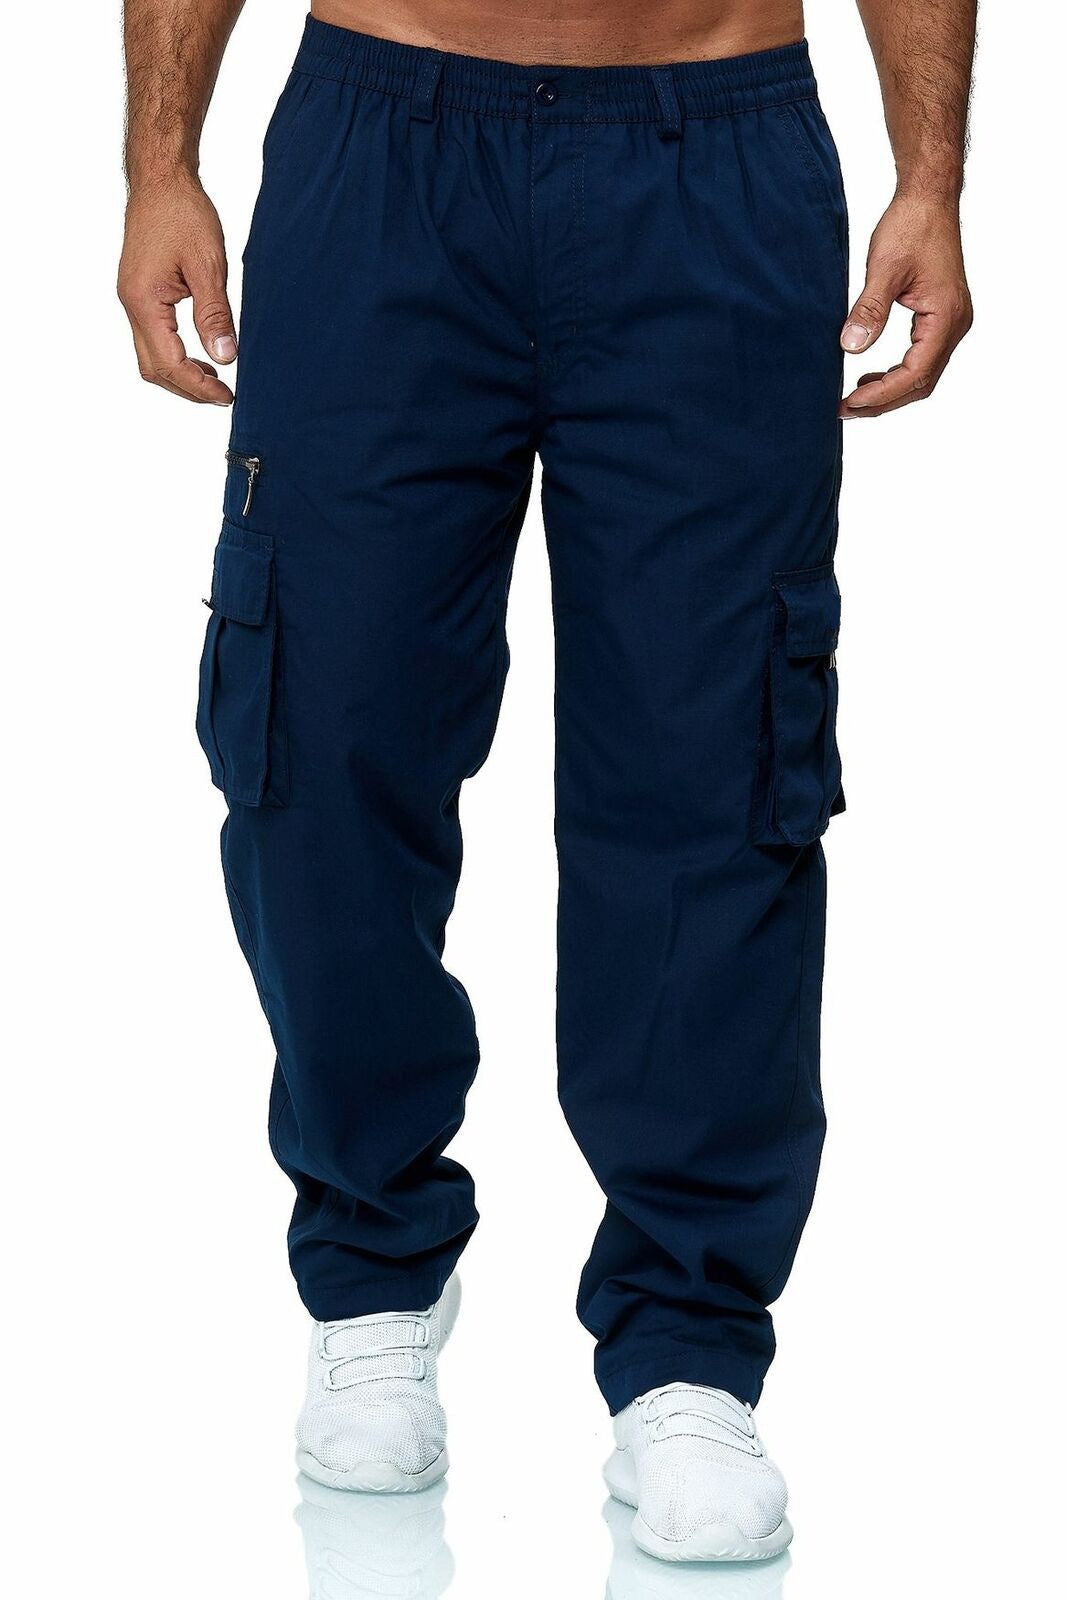 Casual Pockets Men's Outdoor Pants-Pants-Navy Blue-S-Free Shipping at meselling99